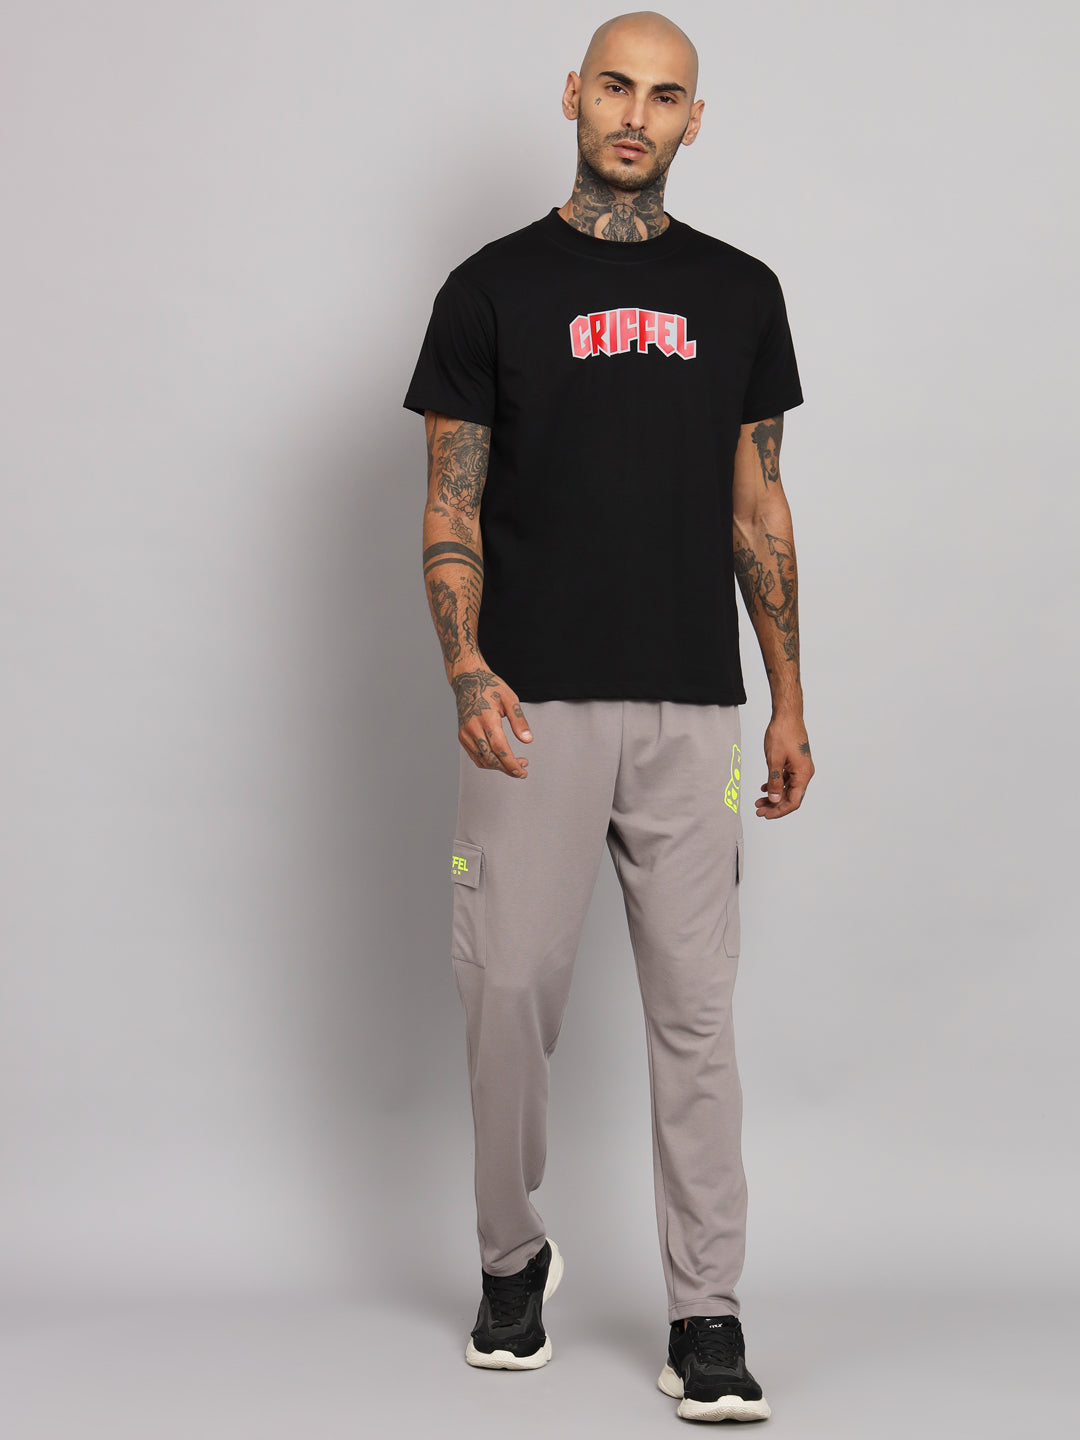 GRIFFEL Men Printed Reflective SMOKEWORK Black Regular fit Cotton T-shirt - griffel